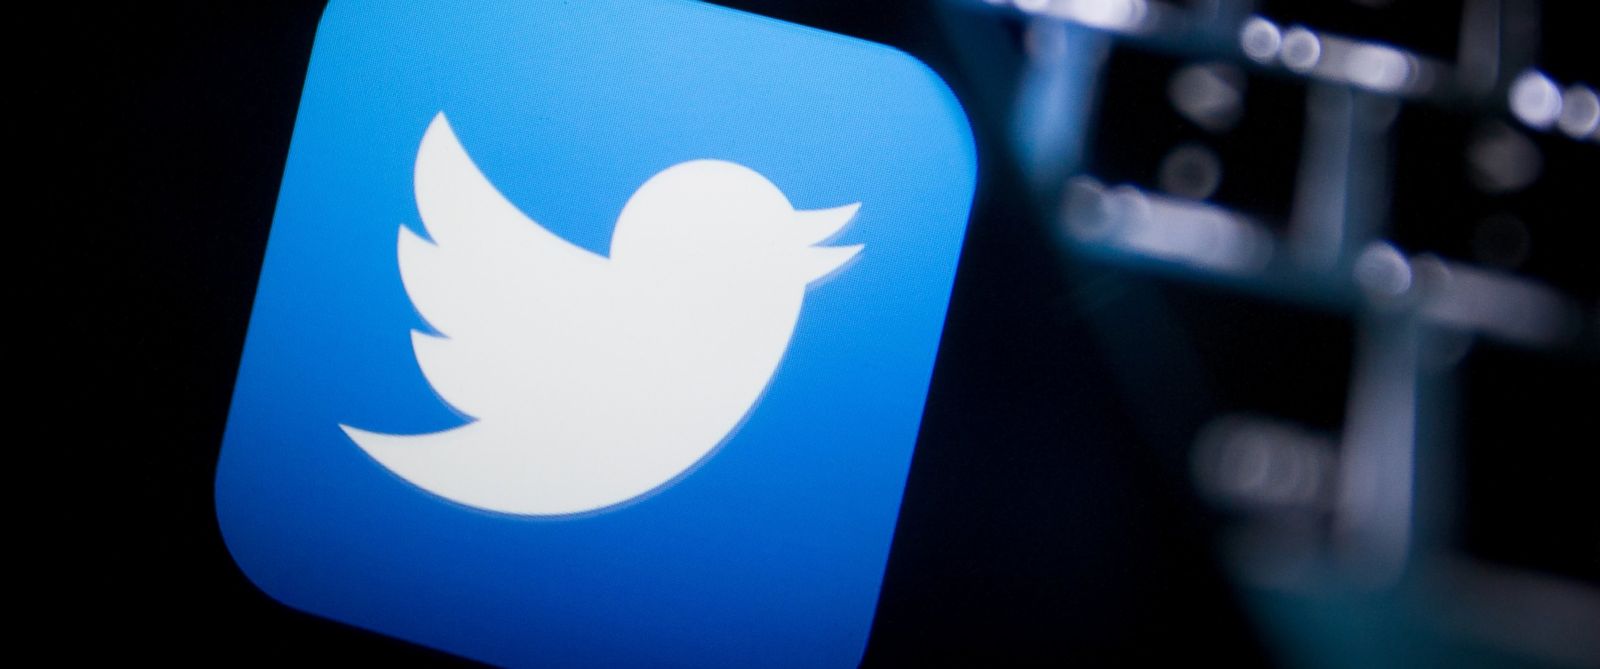 Twitter отказался от сотрудничества с Russia Today и Sputnik из-за итогов выборов 2016 в США